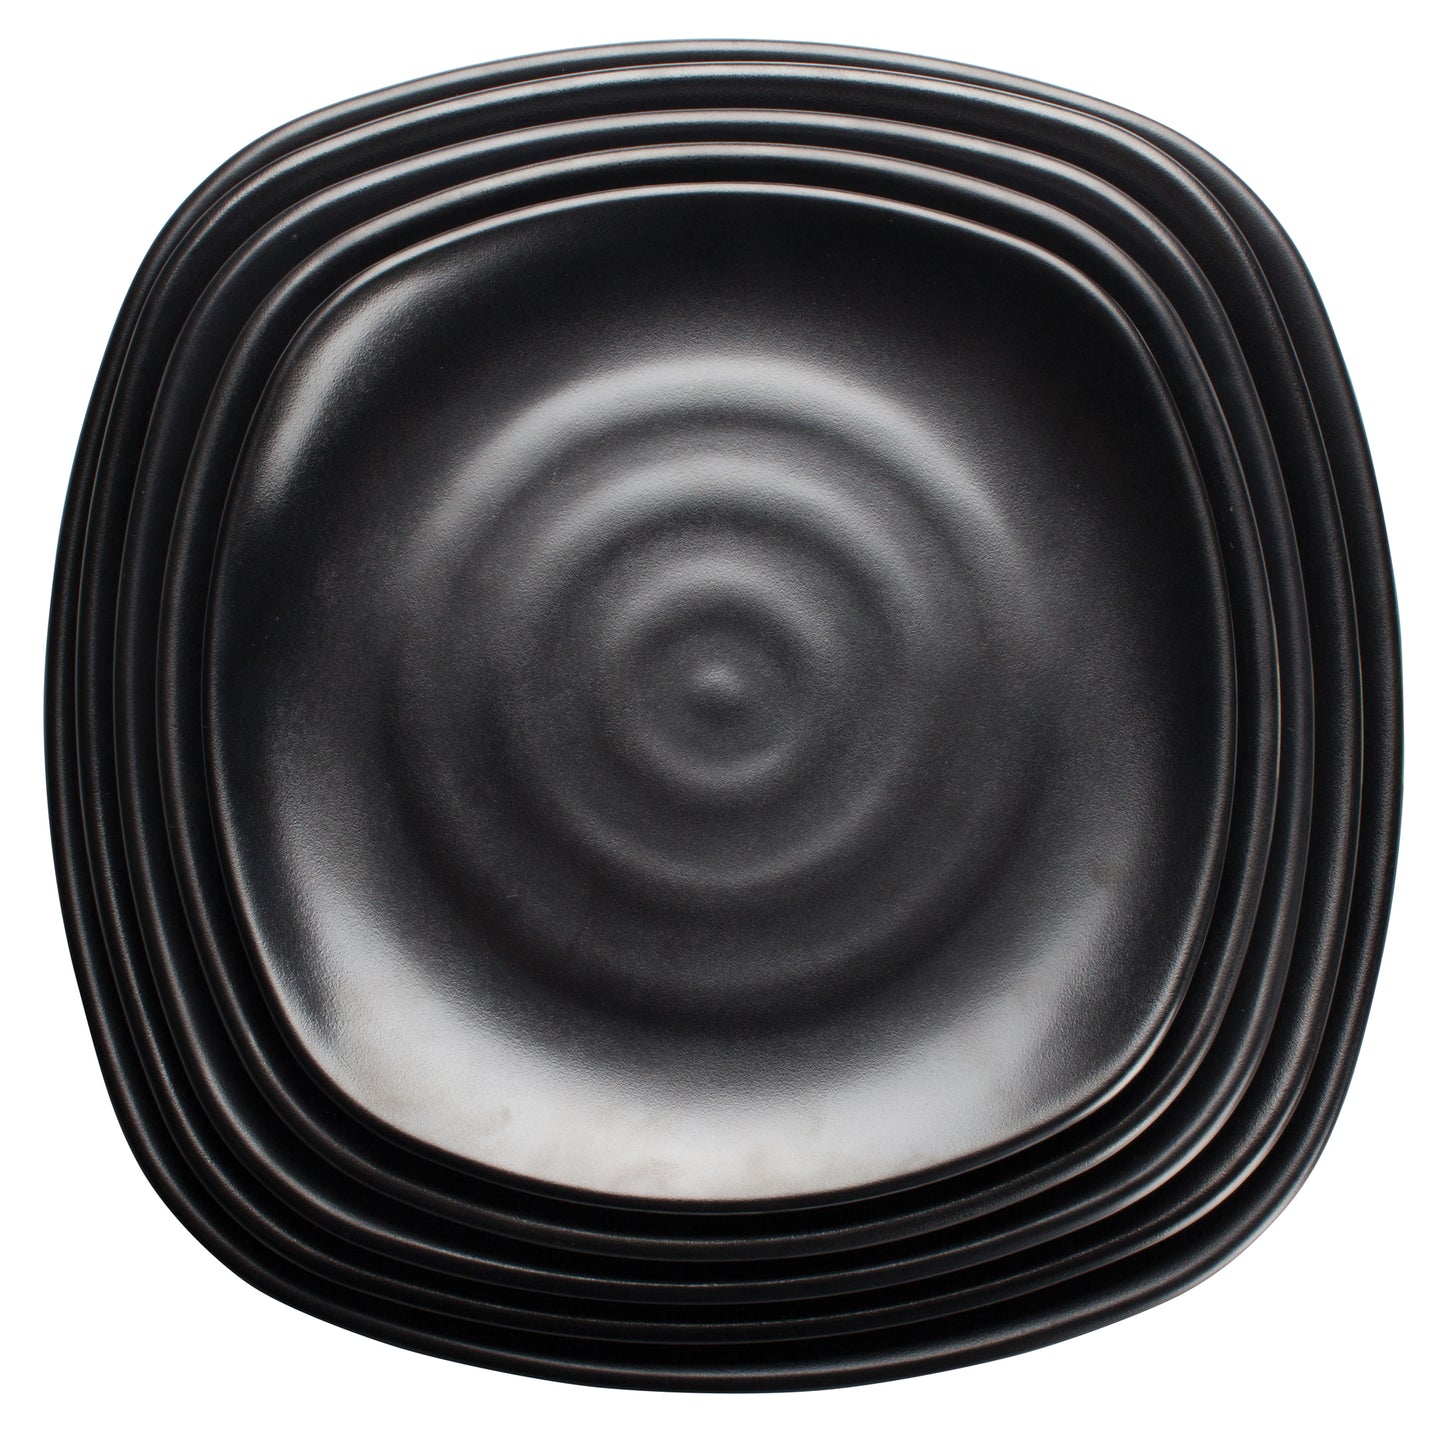 WDM013-306 - 13-3/4" Melamine Square Plate, Black, 12pcs/case